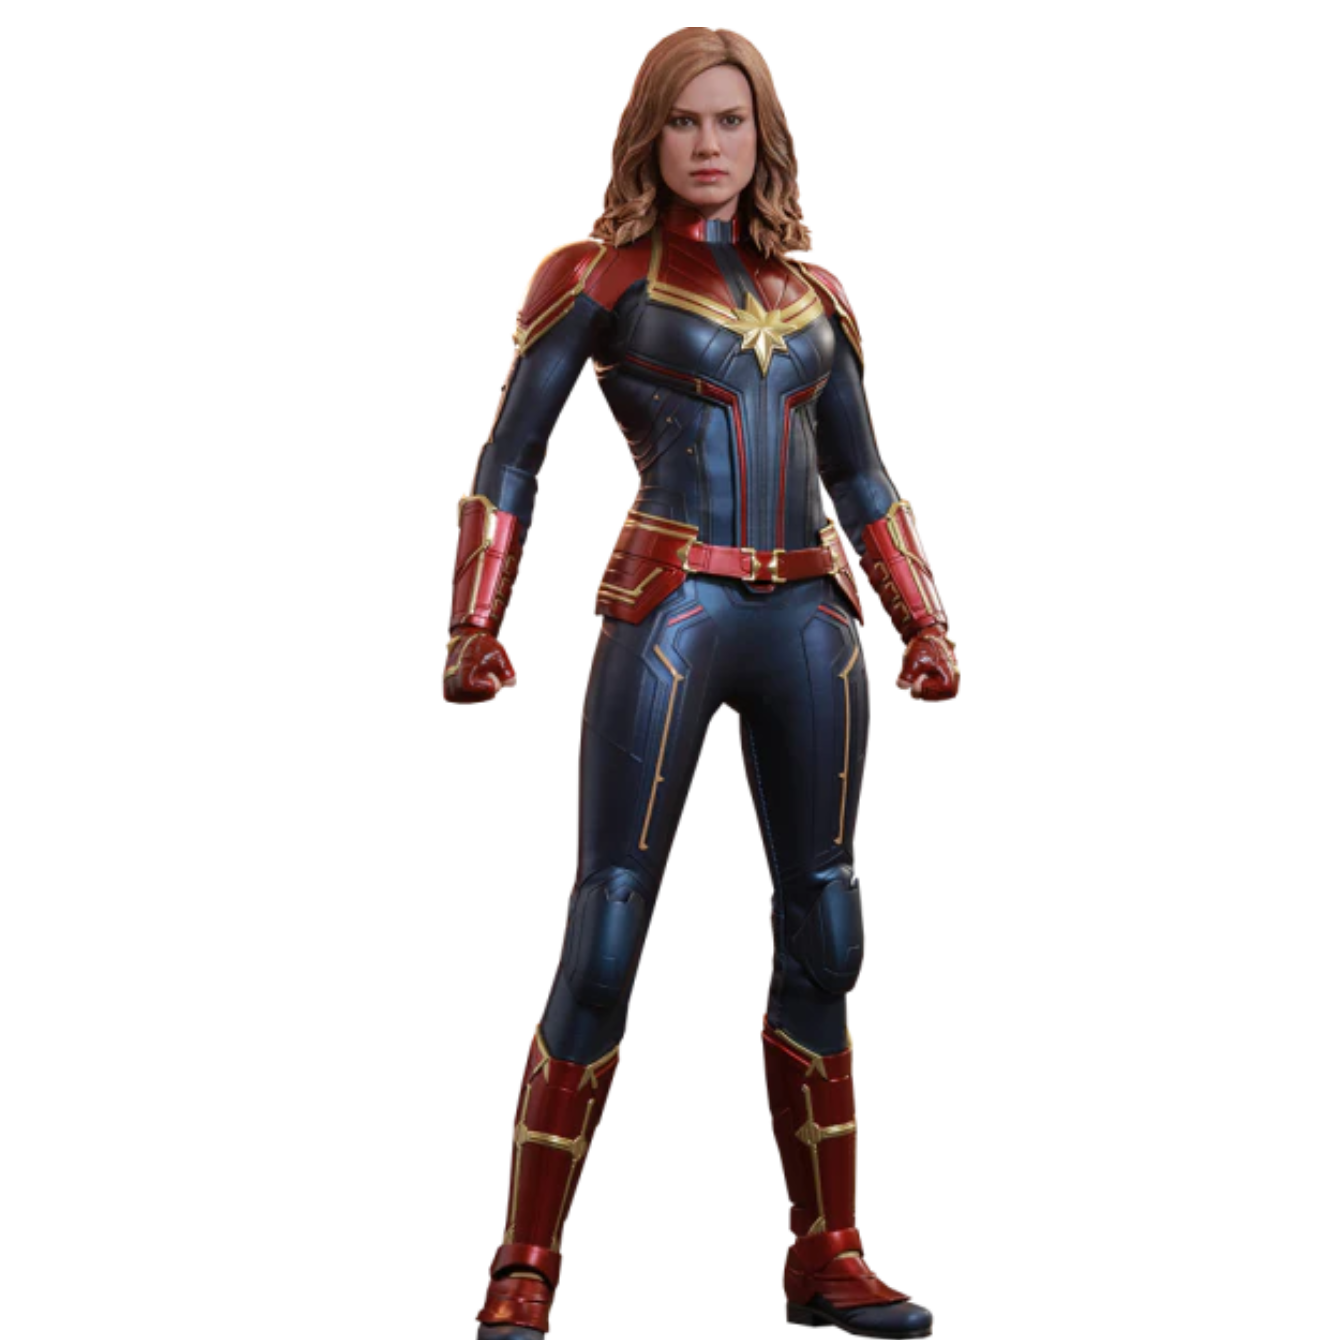 Hot Toys Captain Marvel Sixth Scale Figure